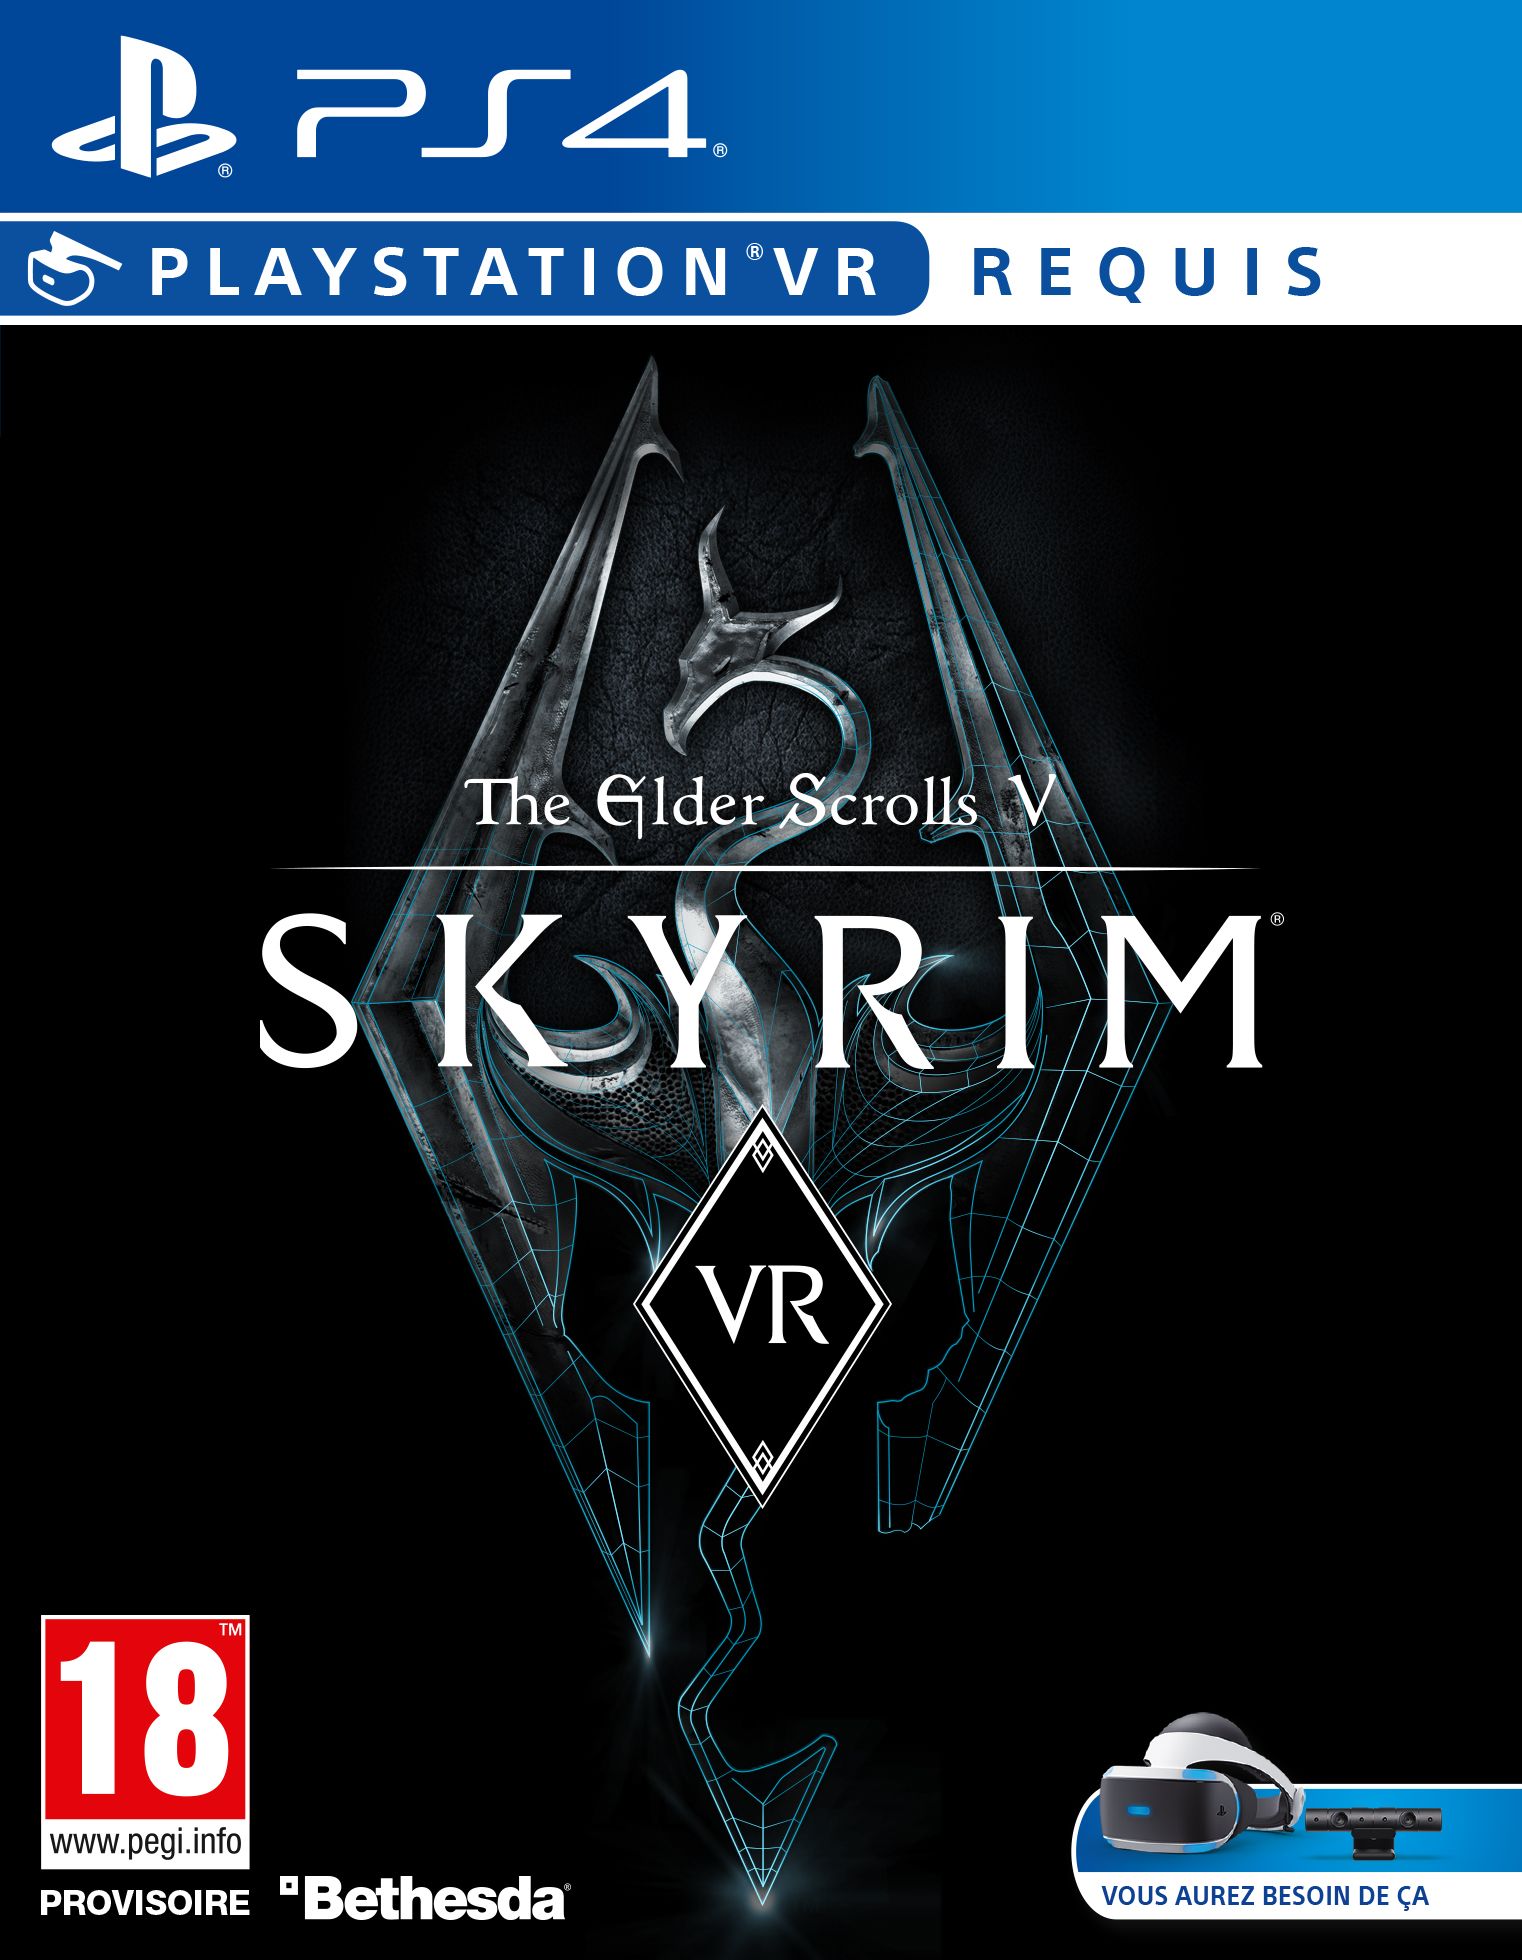 The Elder Scrolls V : Skyrim Special Edition VR